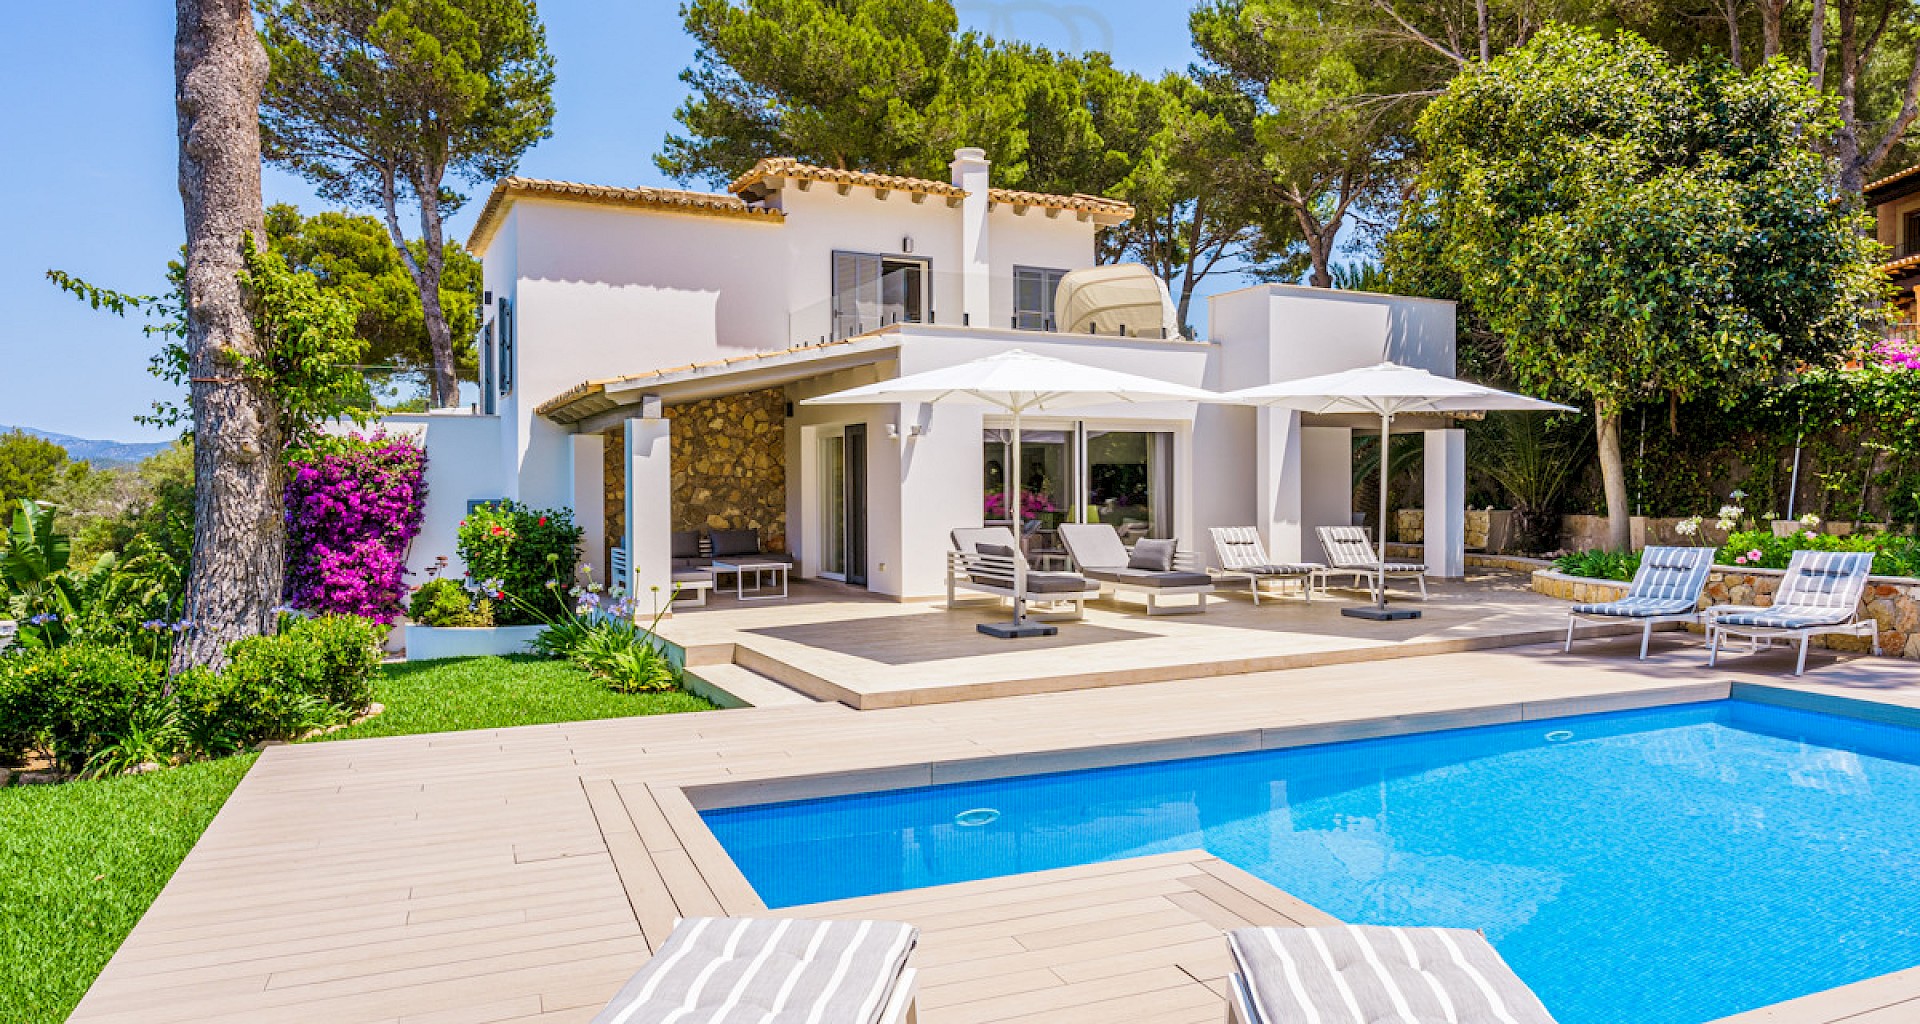 KROHN & LUEDEMANN Holiday Rental License - Luxury family villa in Santa Ponsa with pool and garden 